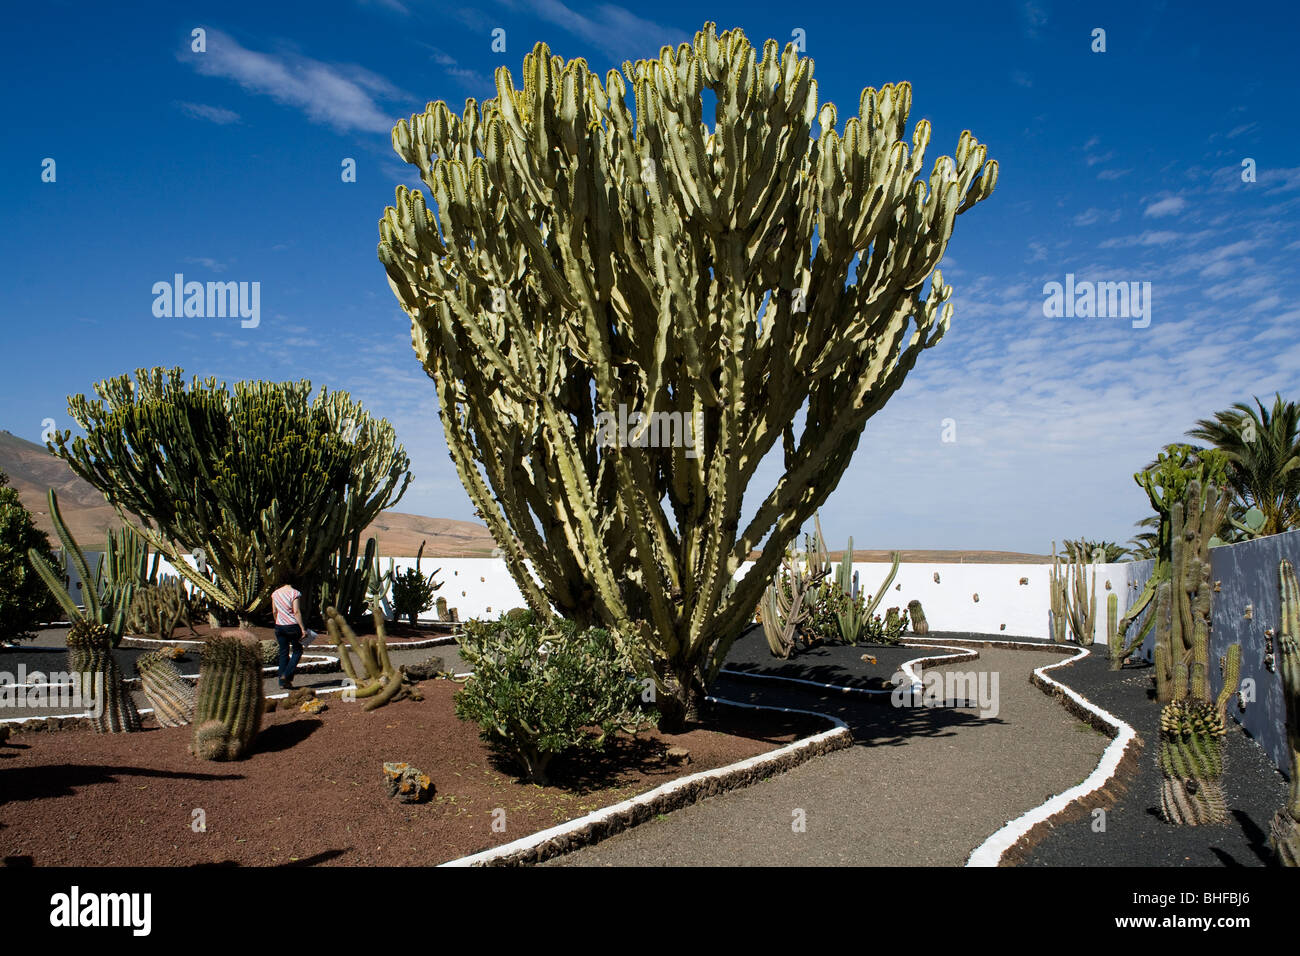 Garden with indigenous plants under blue sky, Antigua, Fuerteventura, Canary Islands, Spain, Europe Stock Photo